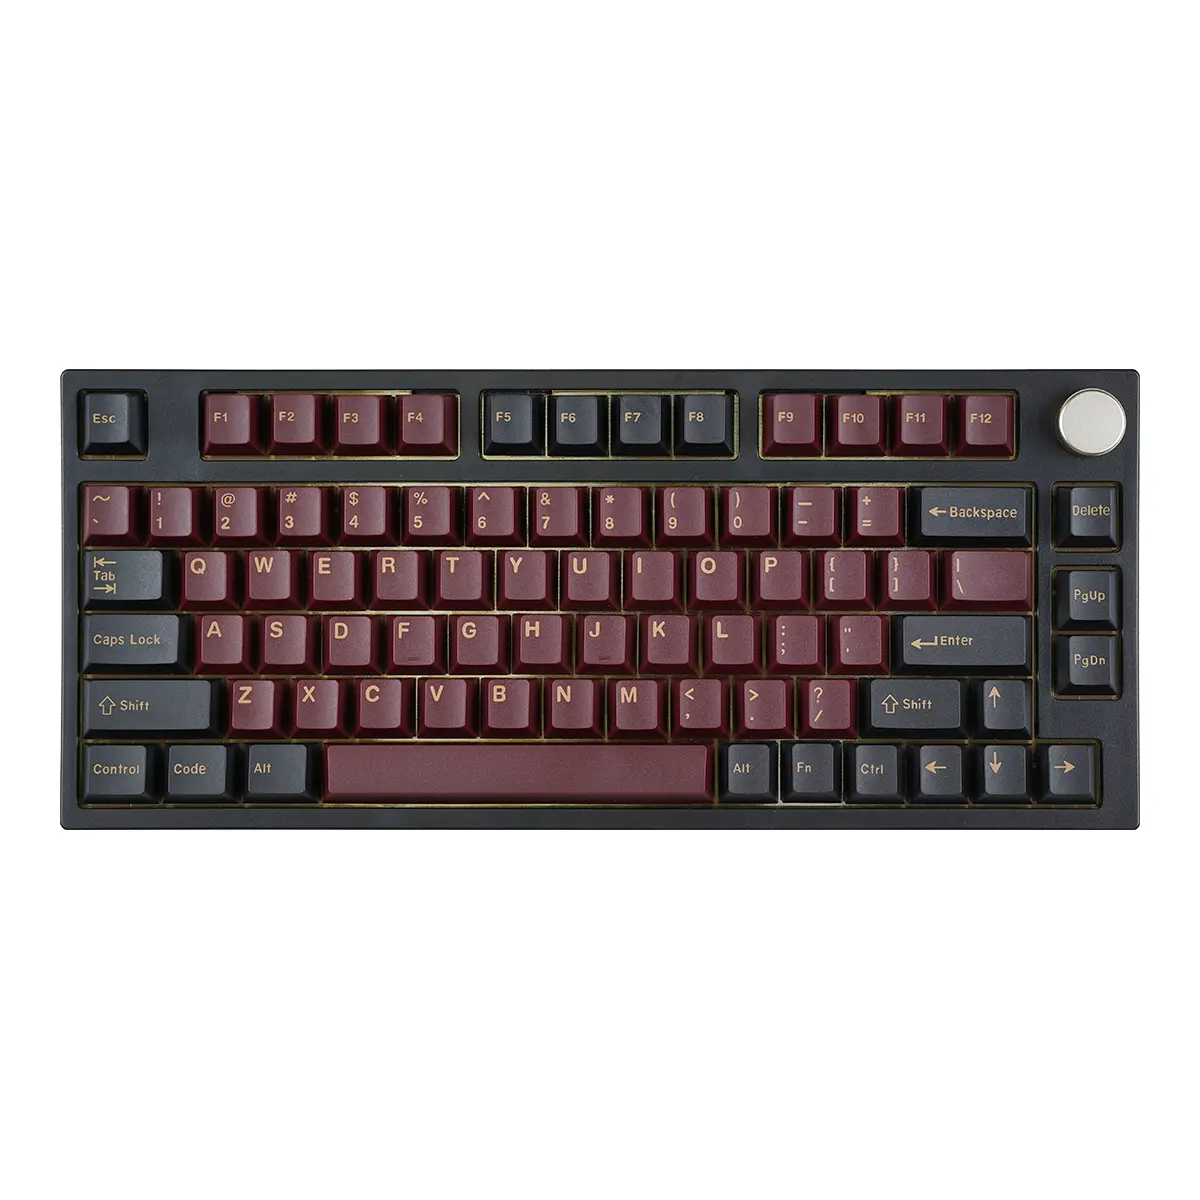 MATHEW TECH MK80 Best Selling USB Type C Keyboard Wireless Rechargeable Keyboard Mechanical Gaming RGB Gaming Wired Keyboard